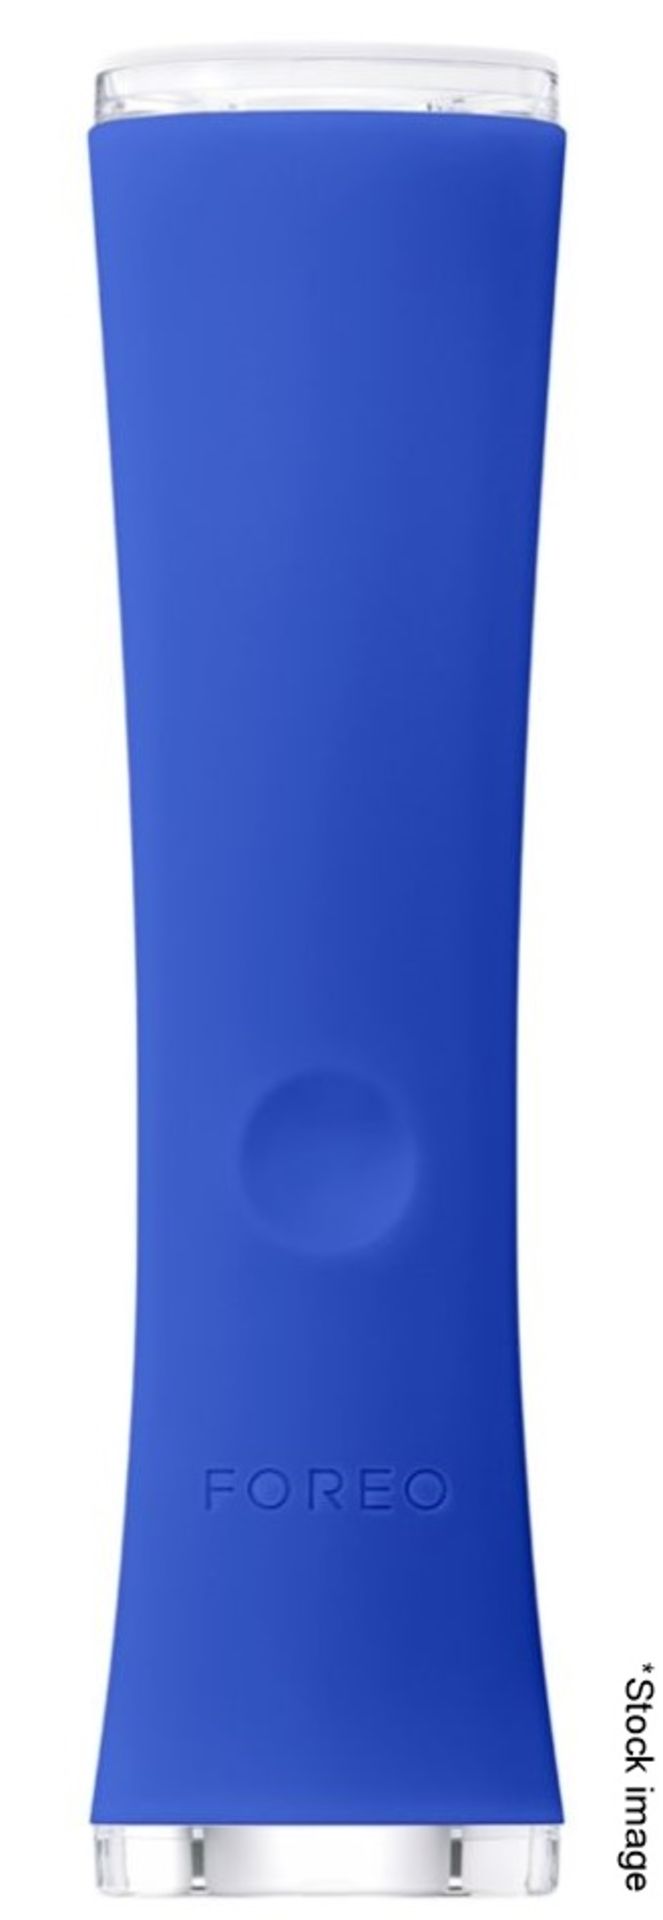 1 x FOREO 'ESPADA' Blue Light Acne Skin Treatment Device - Original Price £149.00 - Sealed & Boxed - Image 2 of 7